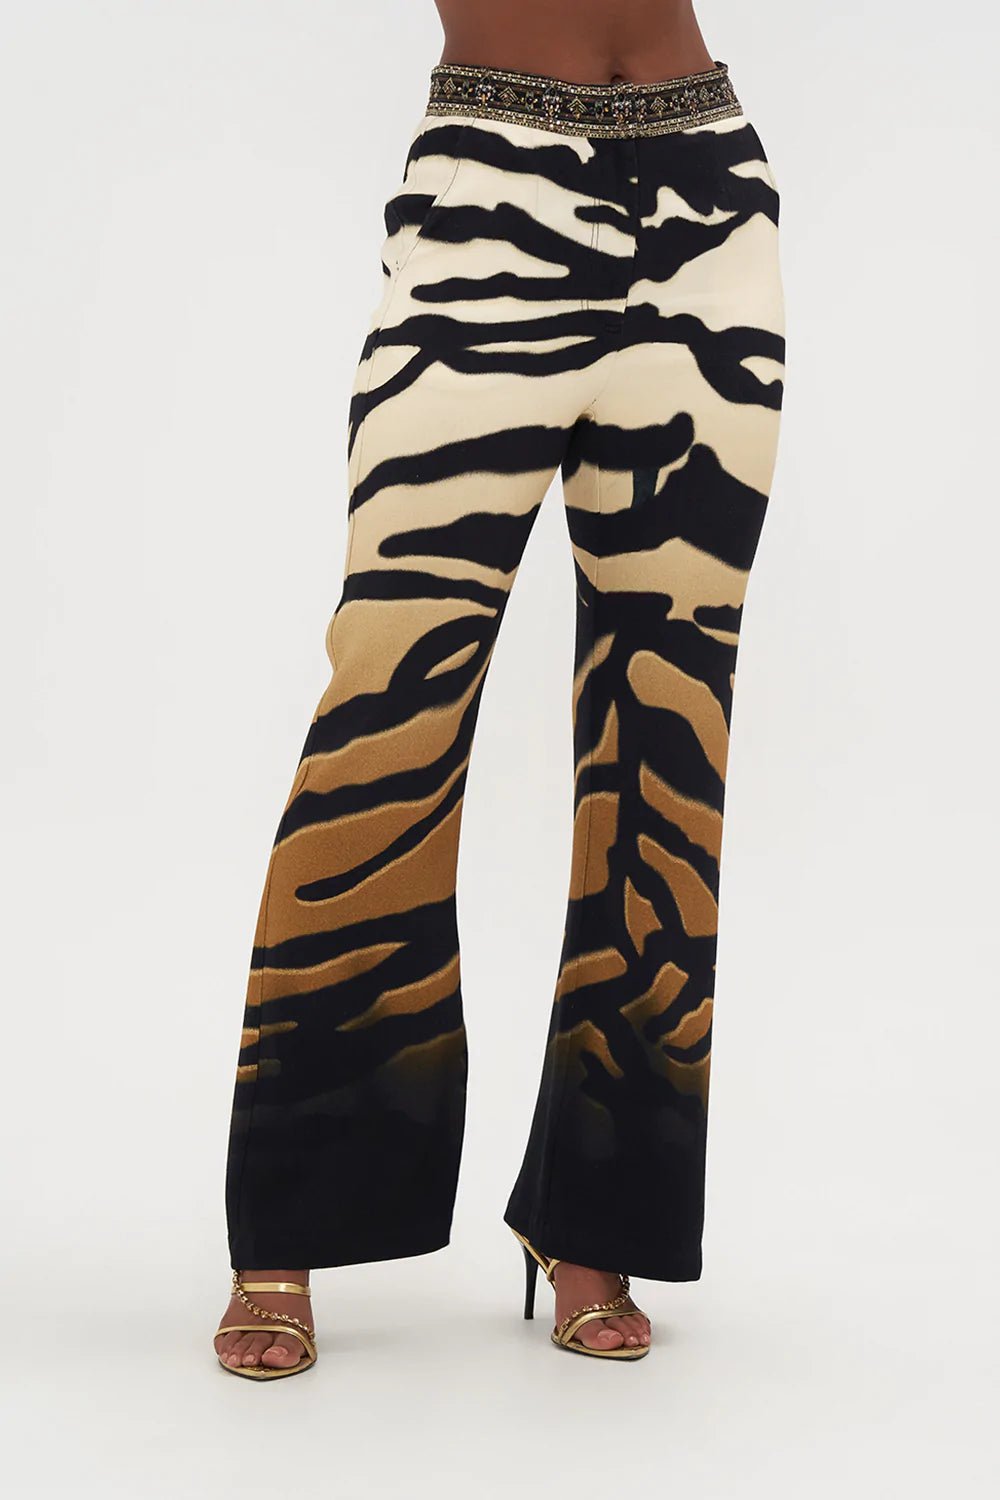 CAMILLA - Full Length Flared Pant Tame My Tiger - Camilla - Pinkhill - darwin fashion - darwin boutique